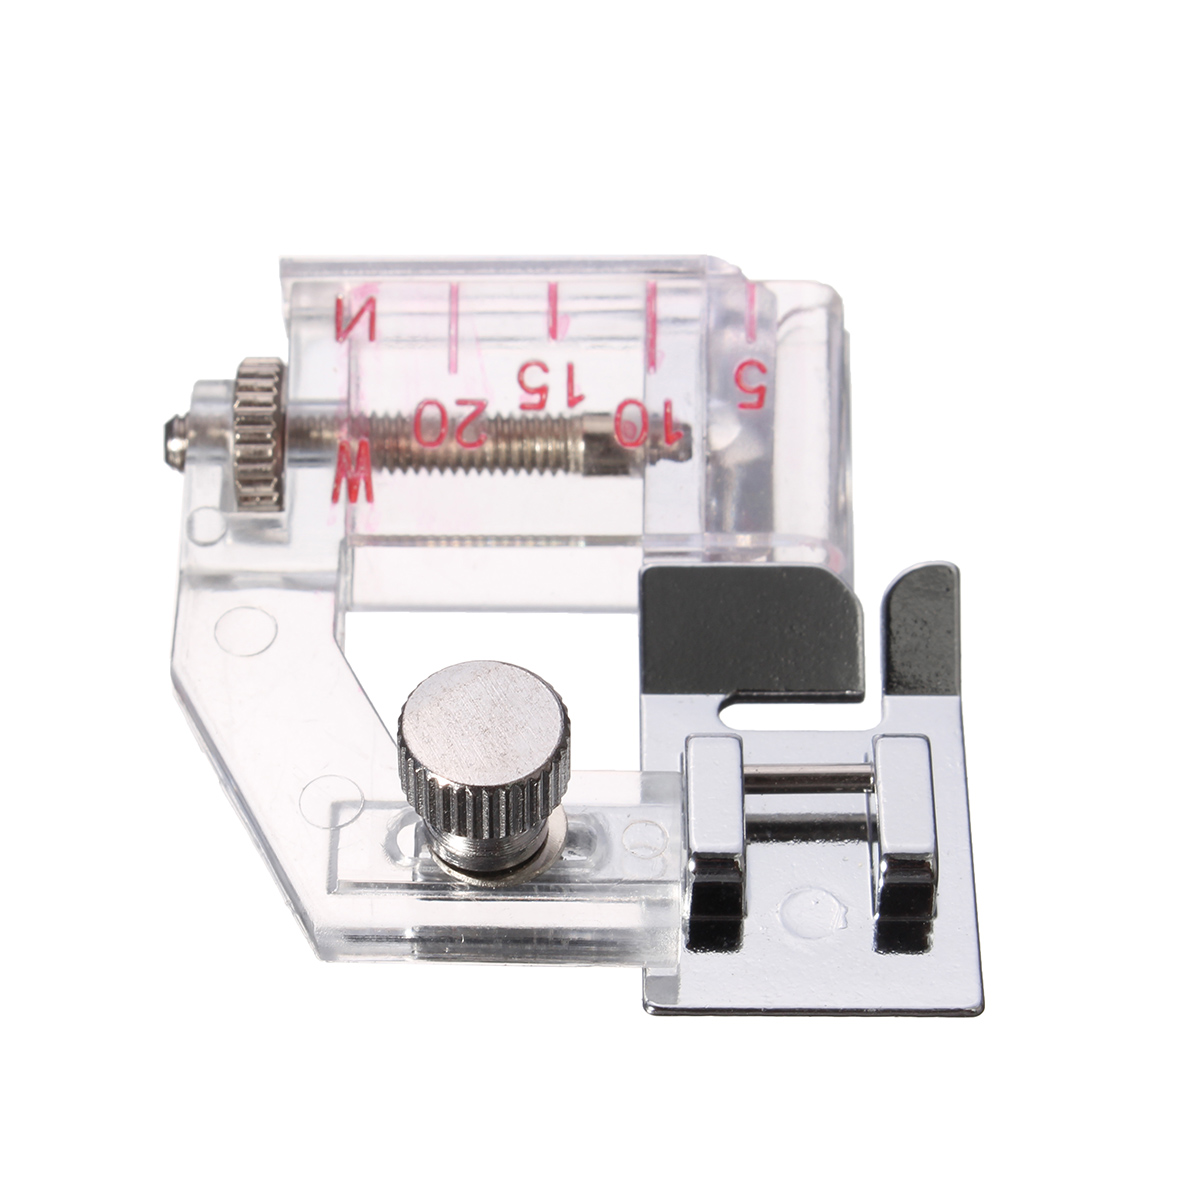 6121825mm-Fabric-Bias-Binding-Tape-Maker-Kit-Set-Binder-Foot-For-Sewing-Quilting--AWL-1114495-8